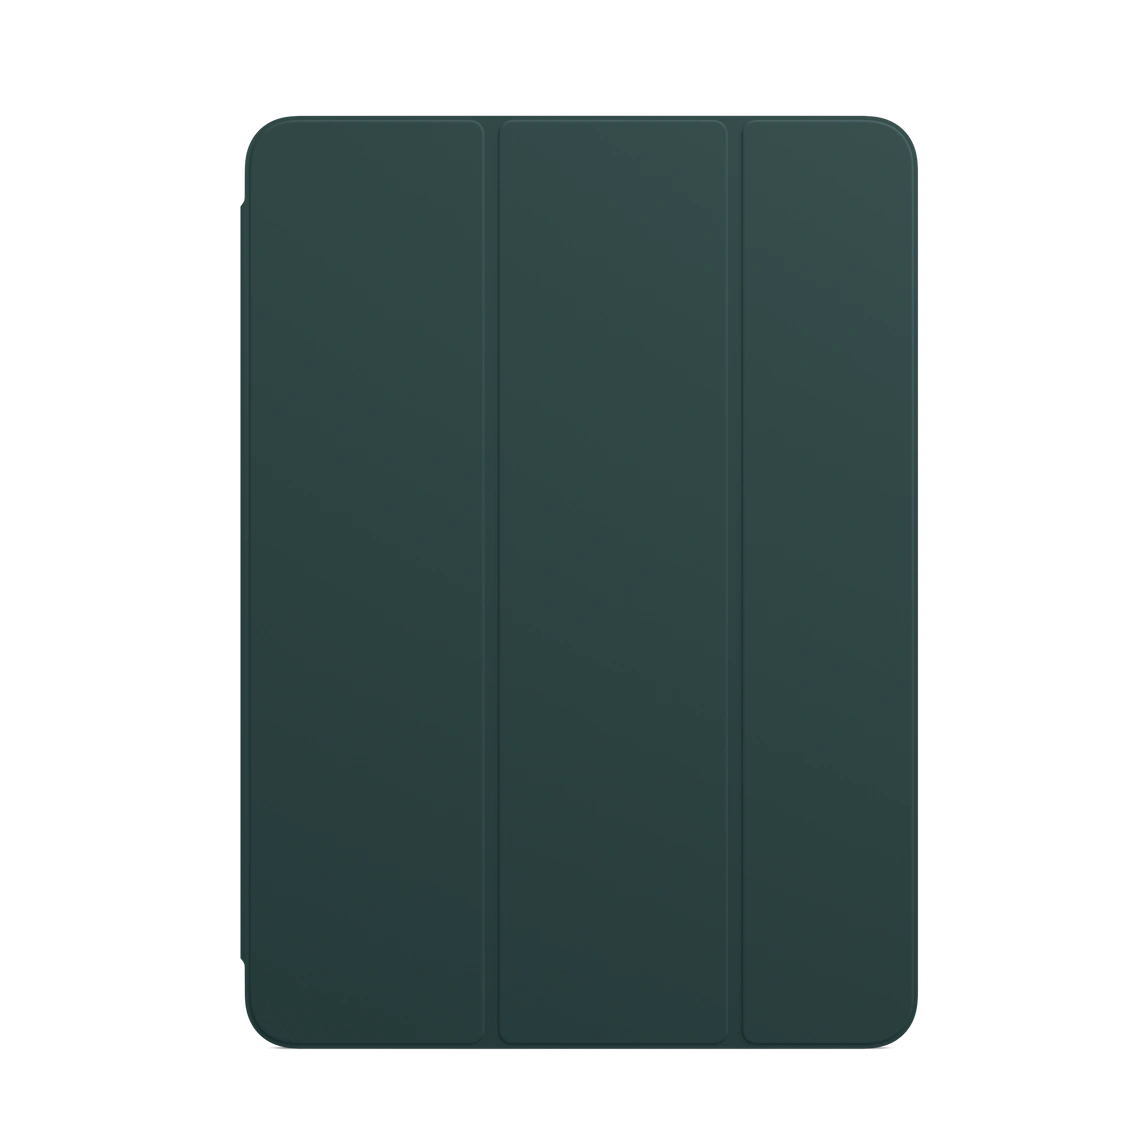 HC Smart Folio for iPad Pro 11-inch